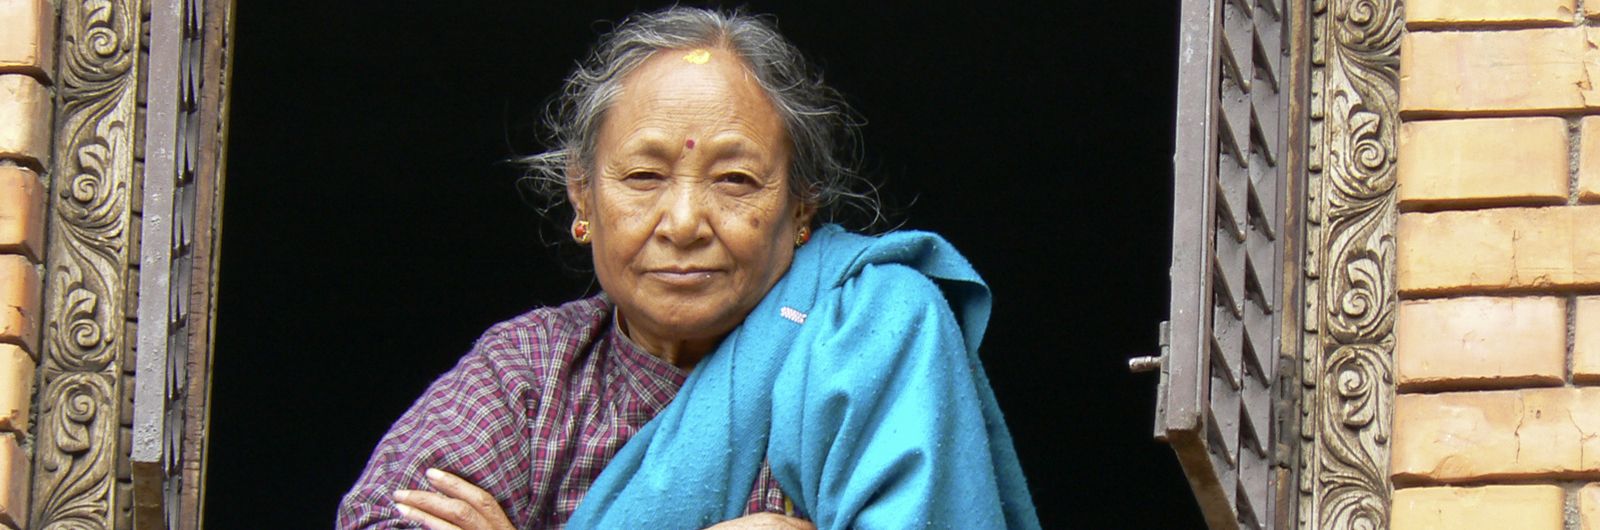 mujer nepalí